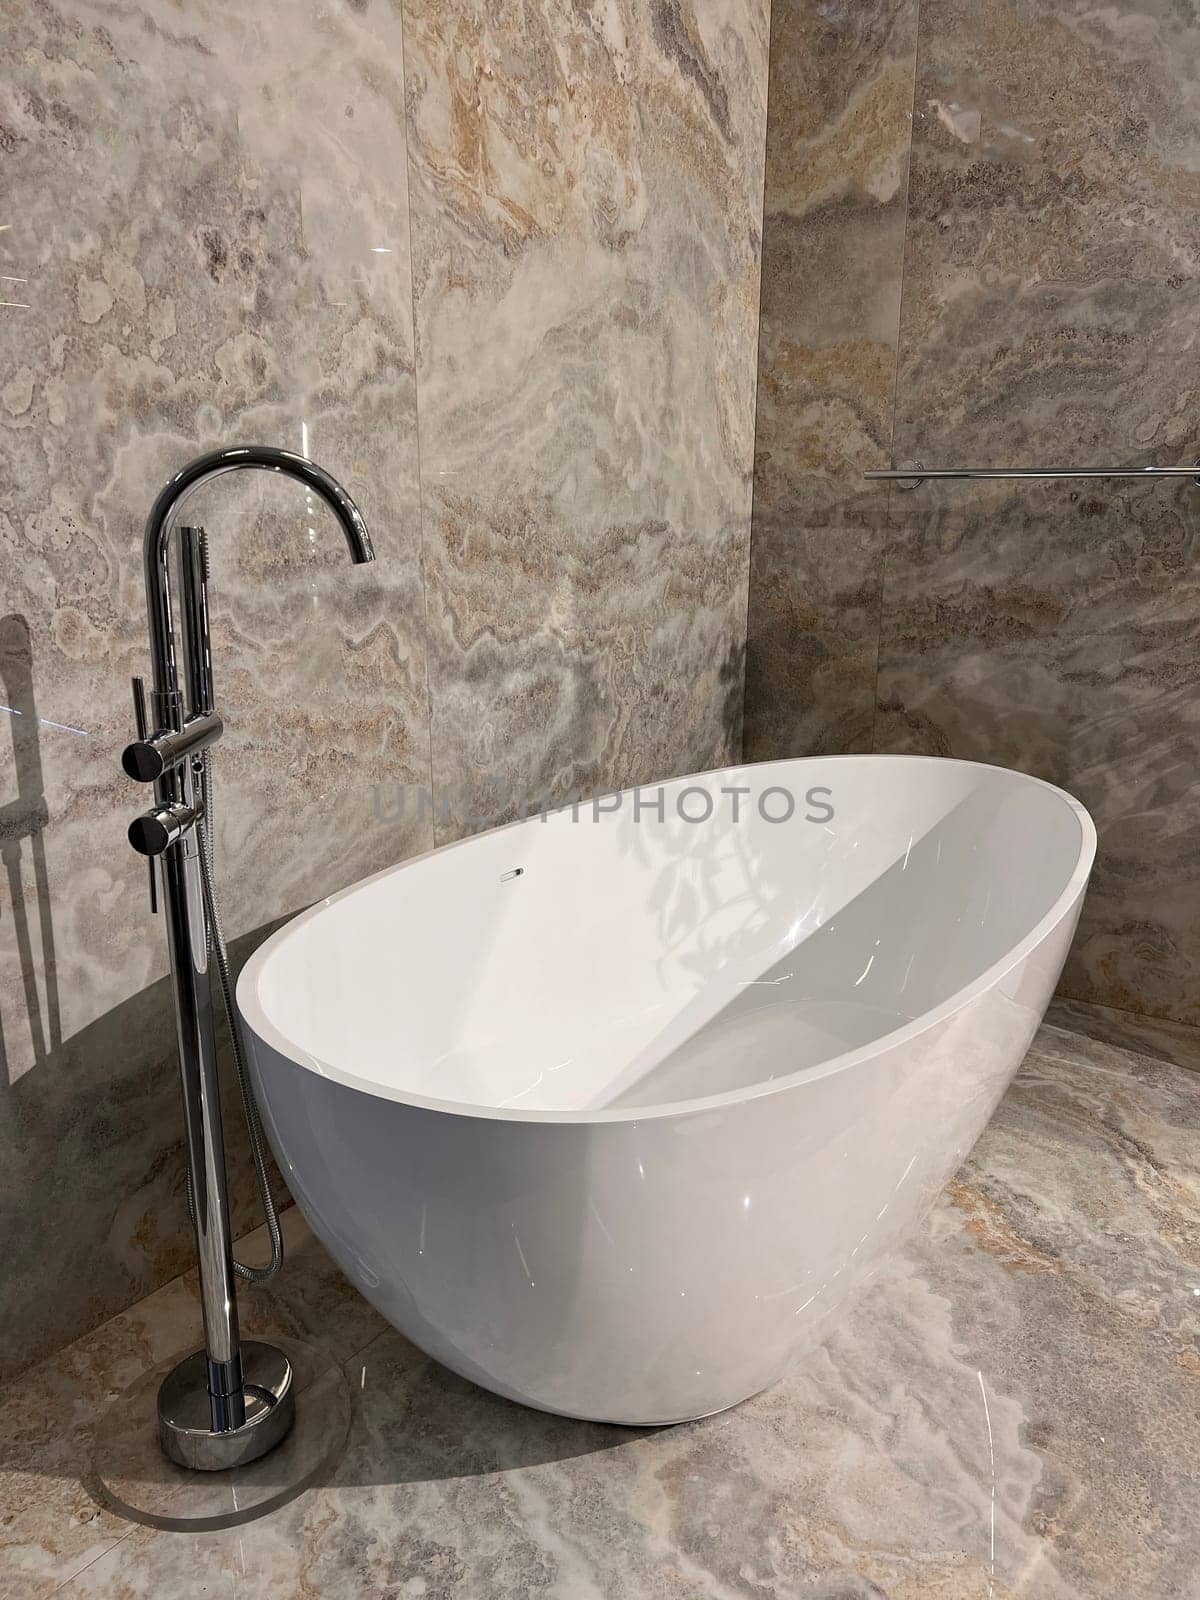 Modern ceramic bathtub . White tub in minimalistic bathroom interior. Porcelain bathtub with classic design in comfortable apartment or hotel room. home decor in spa center